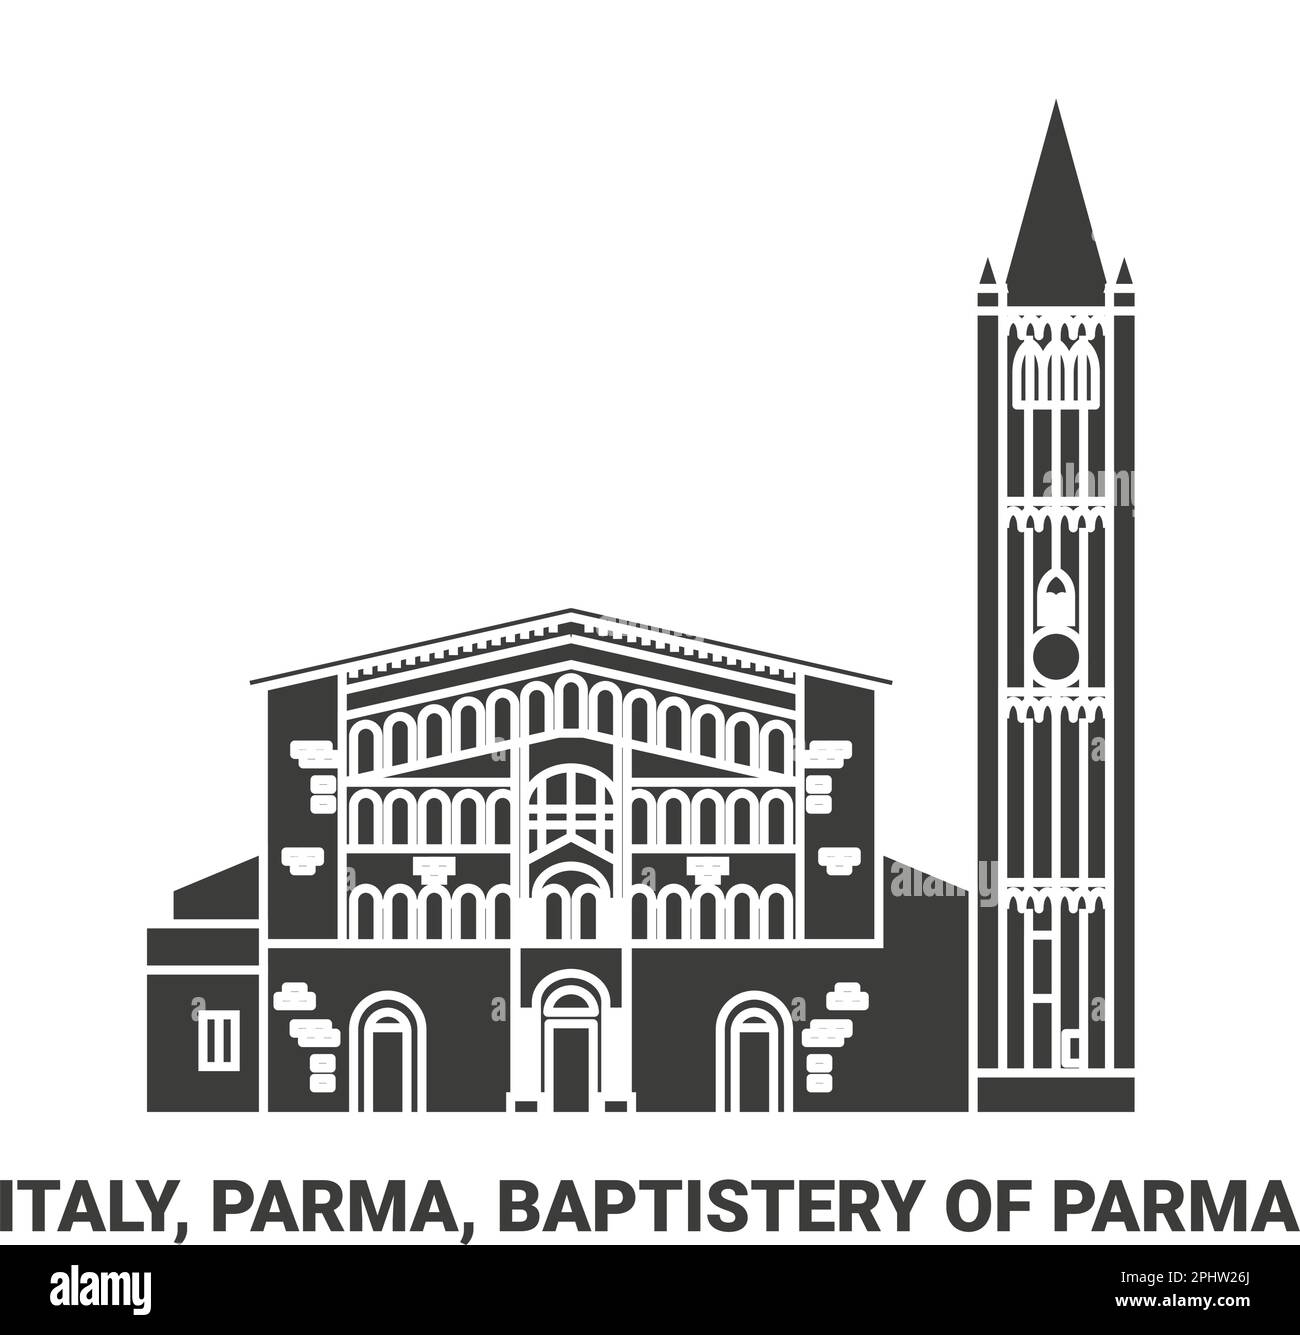 Italien, Parma, Baptisterium von Parma Reise Landmarke Illustration Stock Vektor